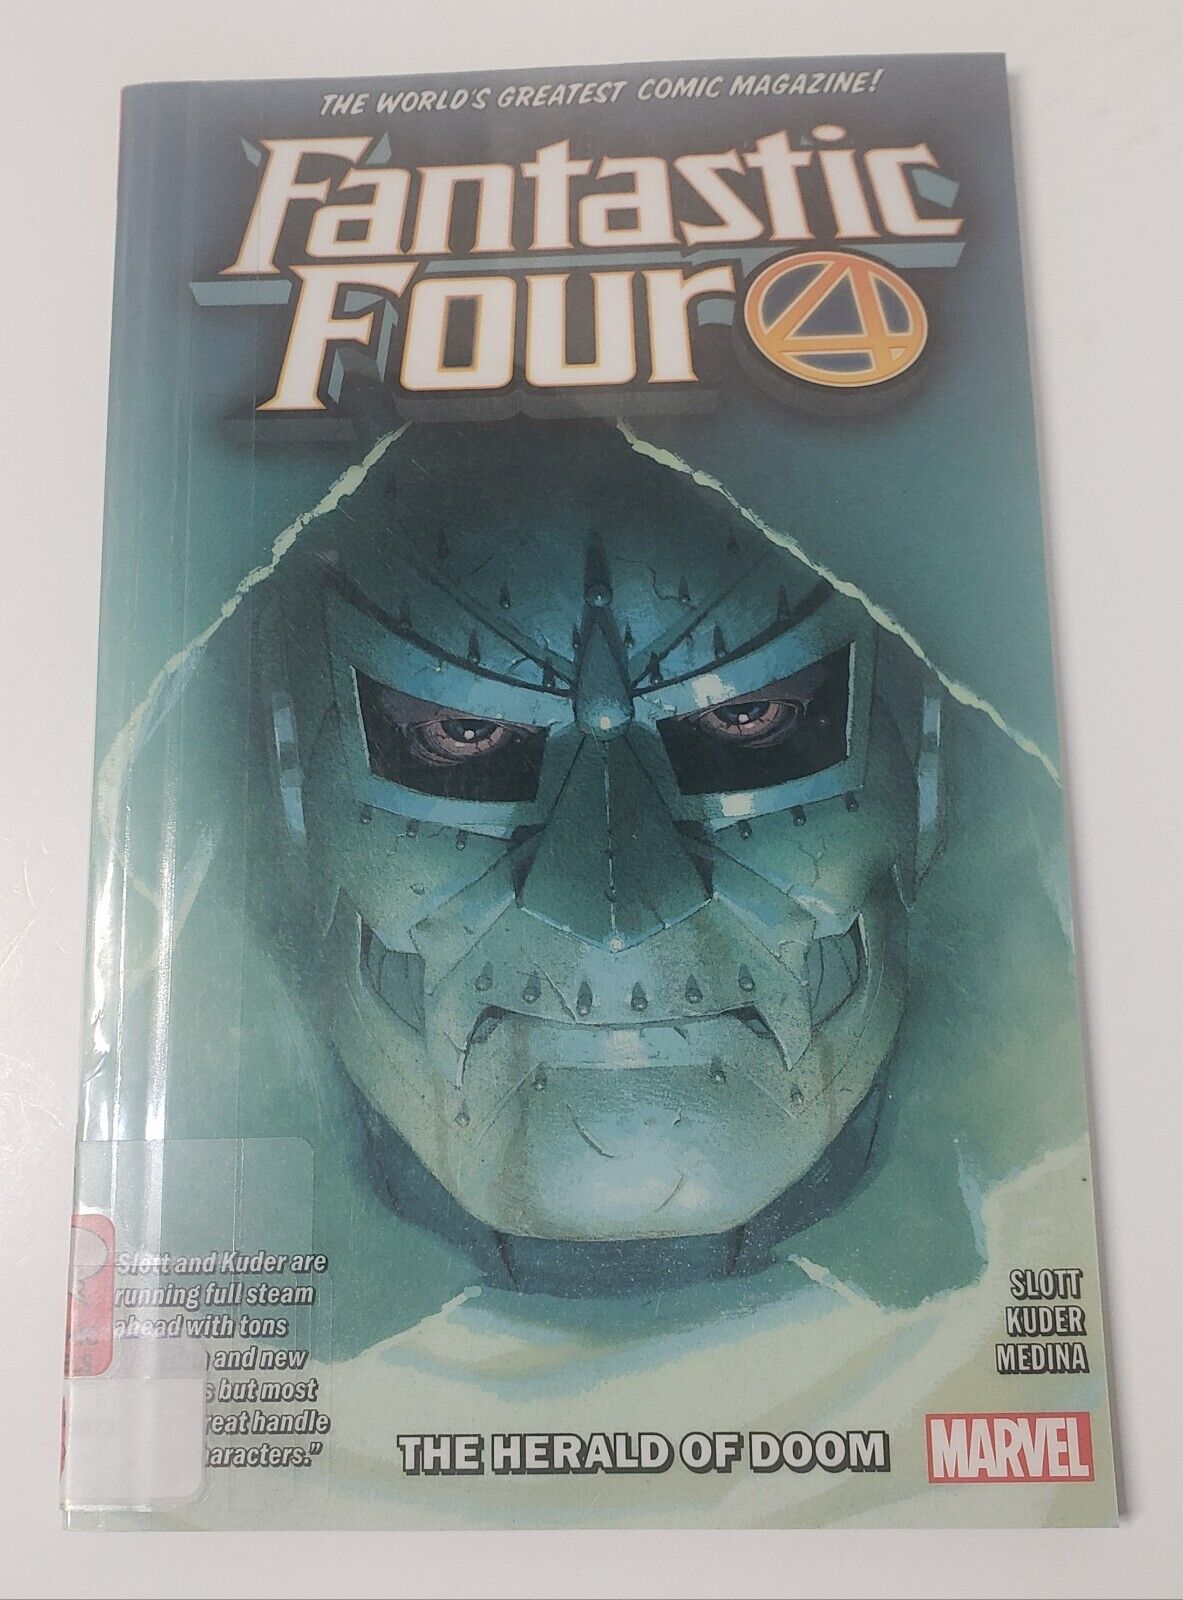 Fantastic Four The Herald of Doom Marvel Vol. 3 by Scoot Kuder Medina Good